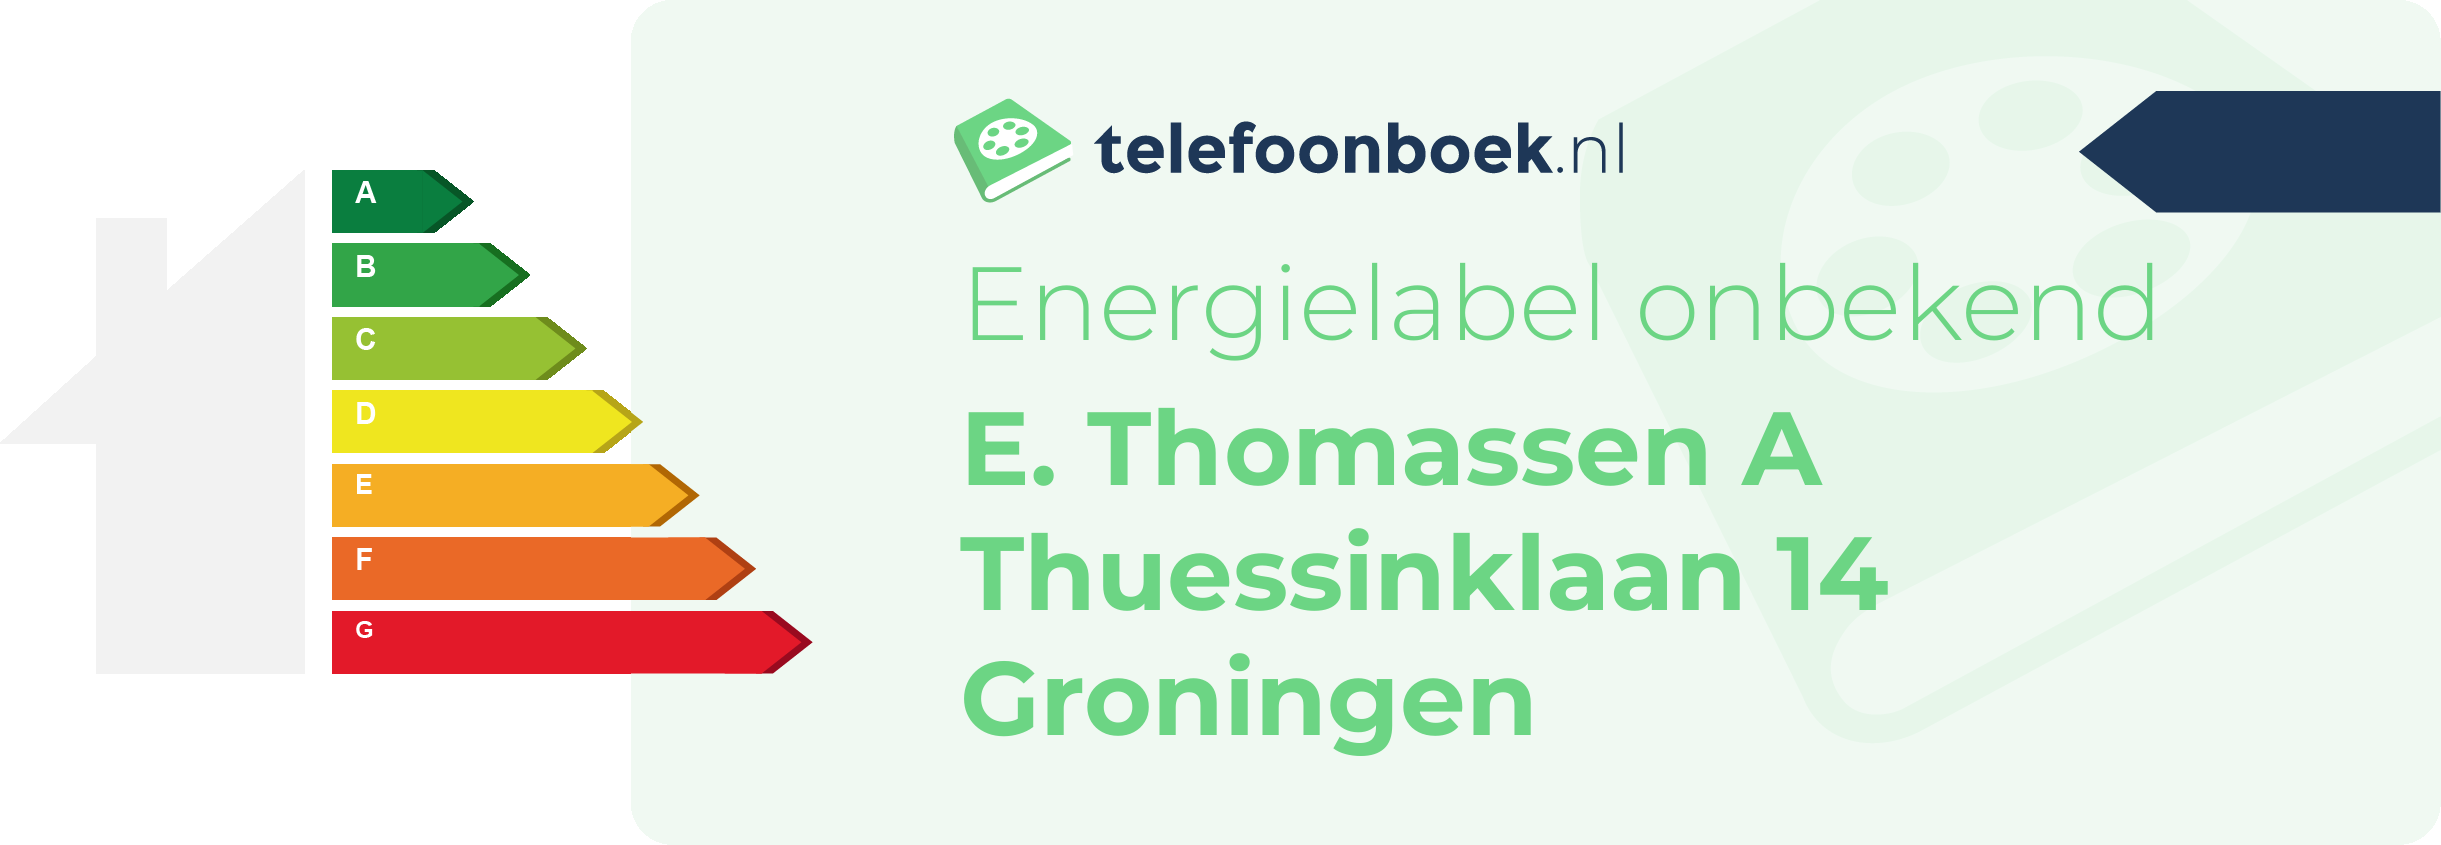 Energielabel E. Thomassen A Thuessinklaan 14 Groningen